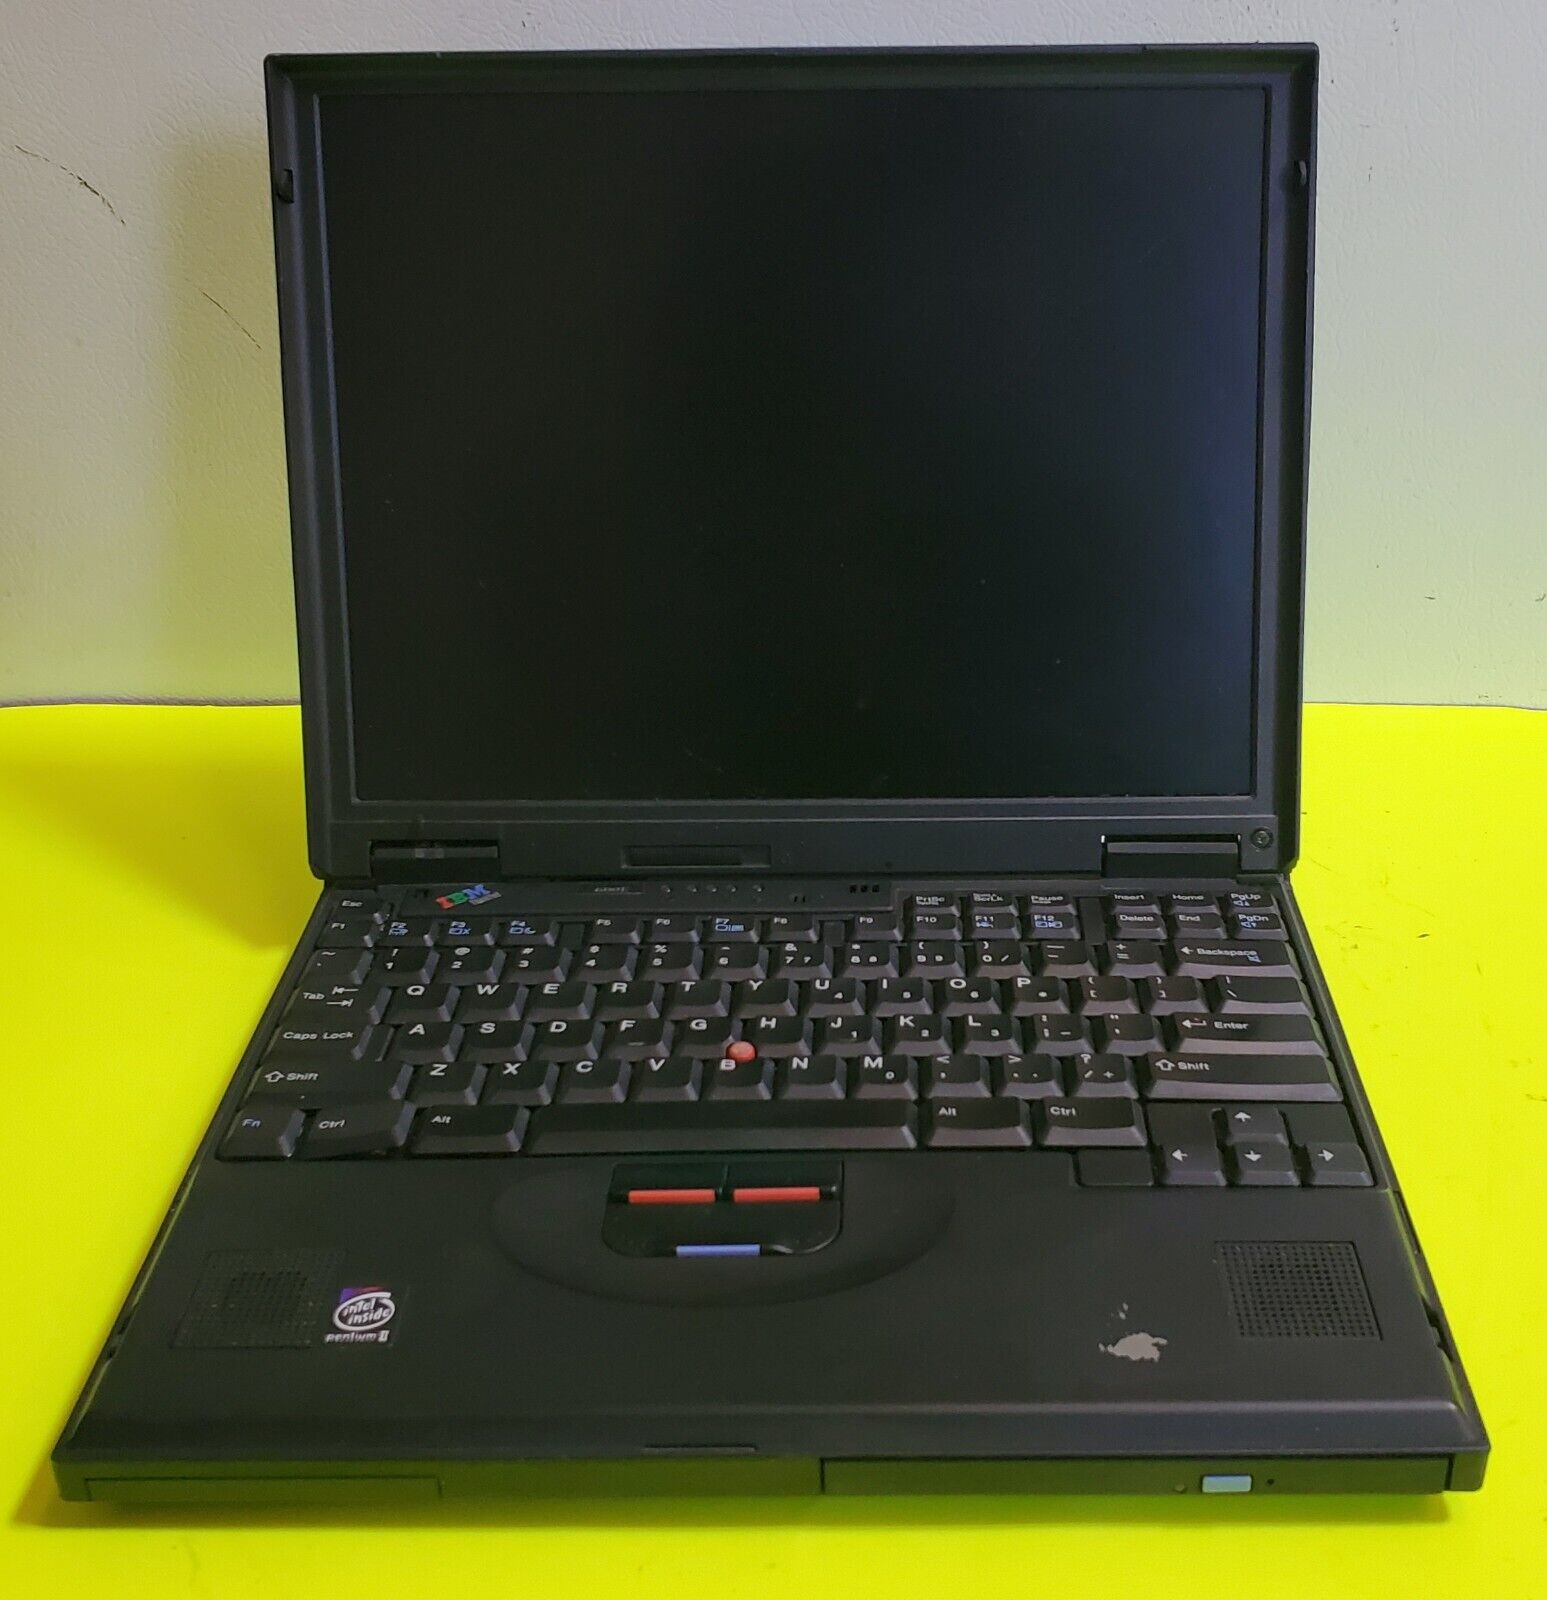 IBM Thinkpad 600E Retro TYPE 2645 Vintage Pentium 2 Laptop Computer - as is